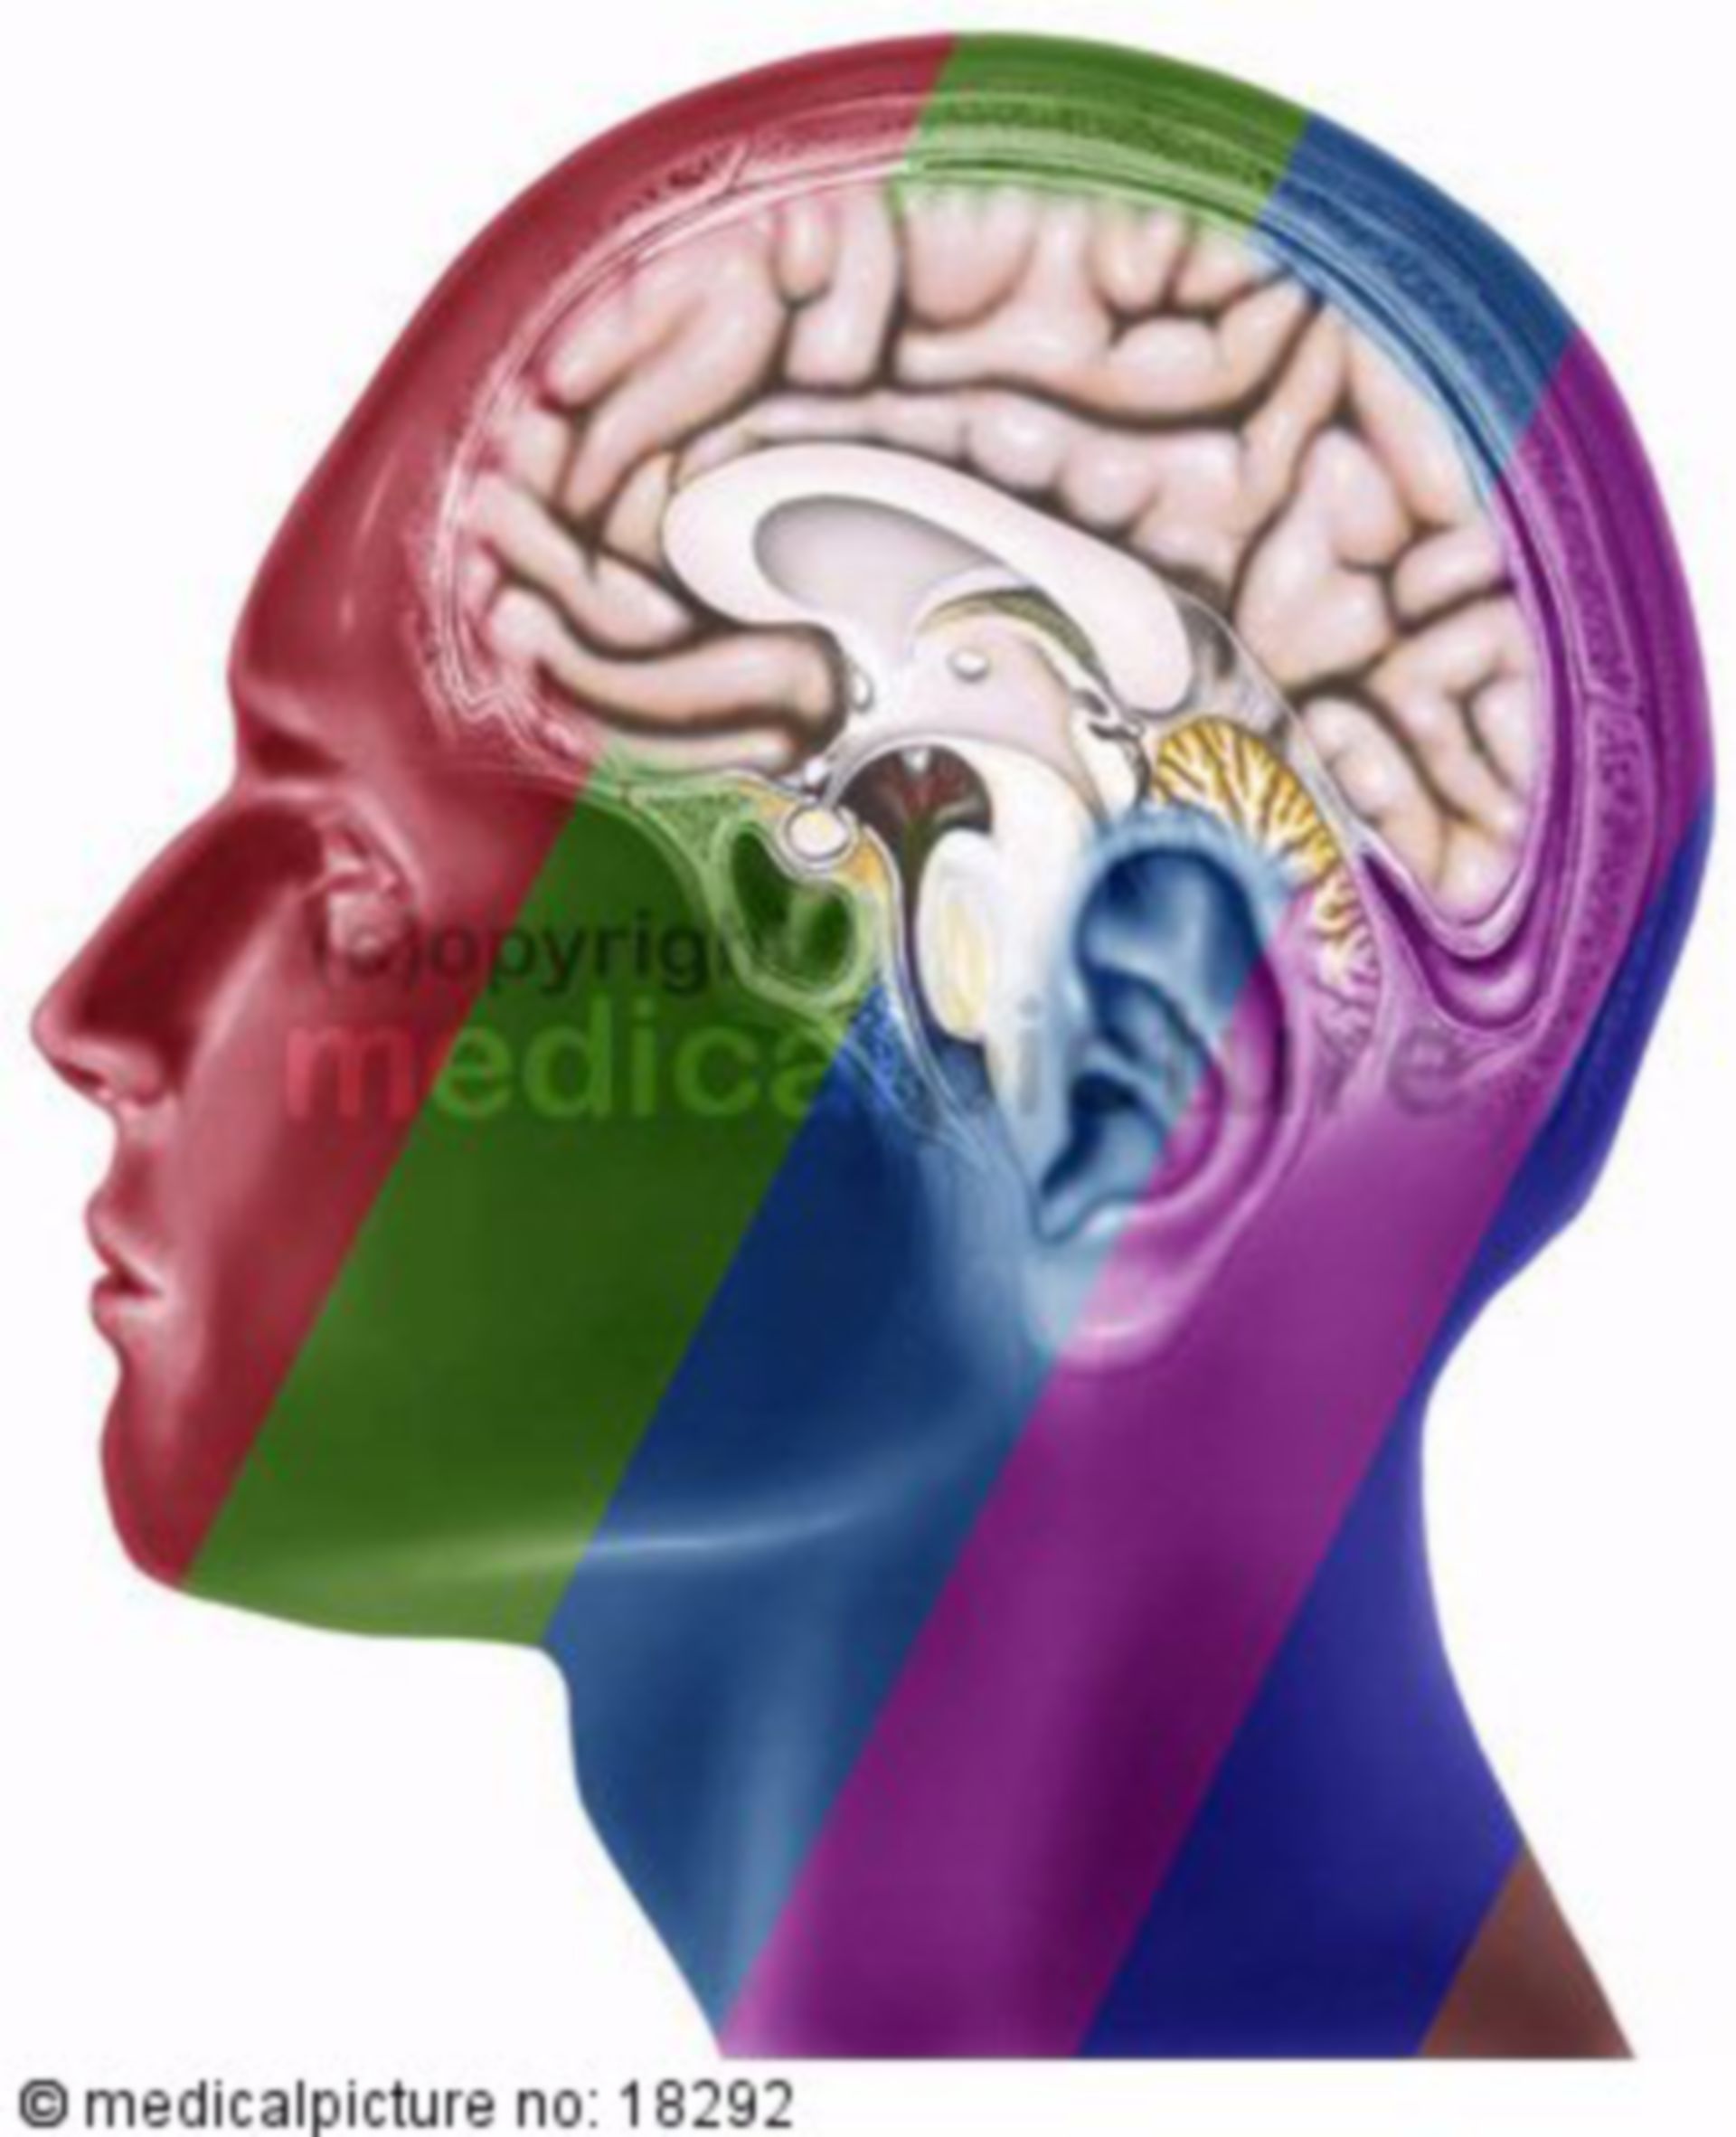  Gehirn in farbig illustriertem Kopf, brain in colored head 
